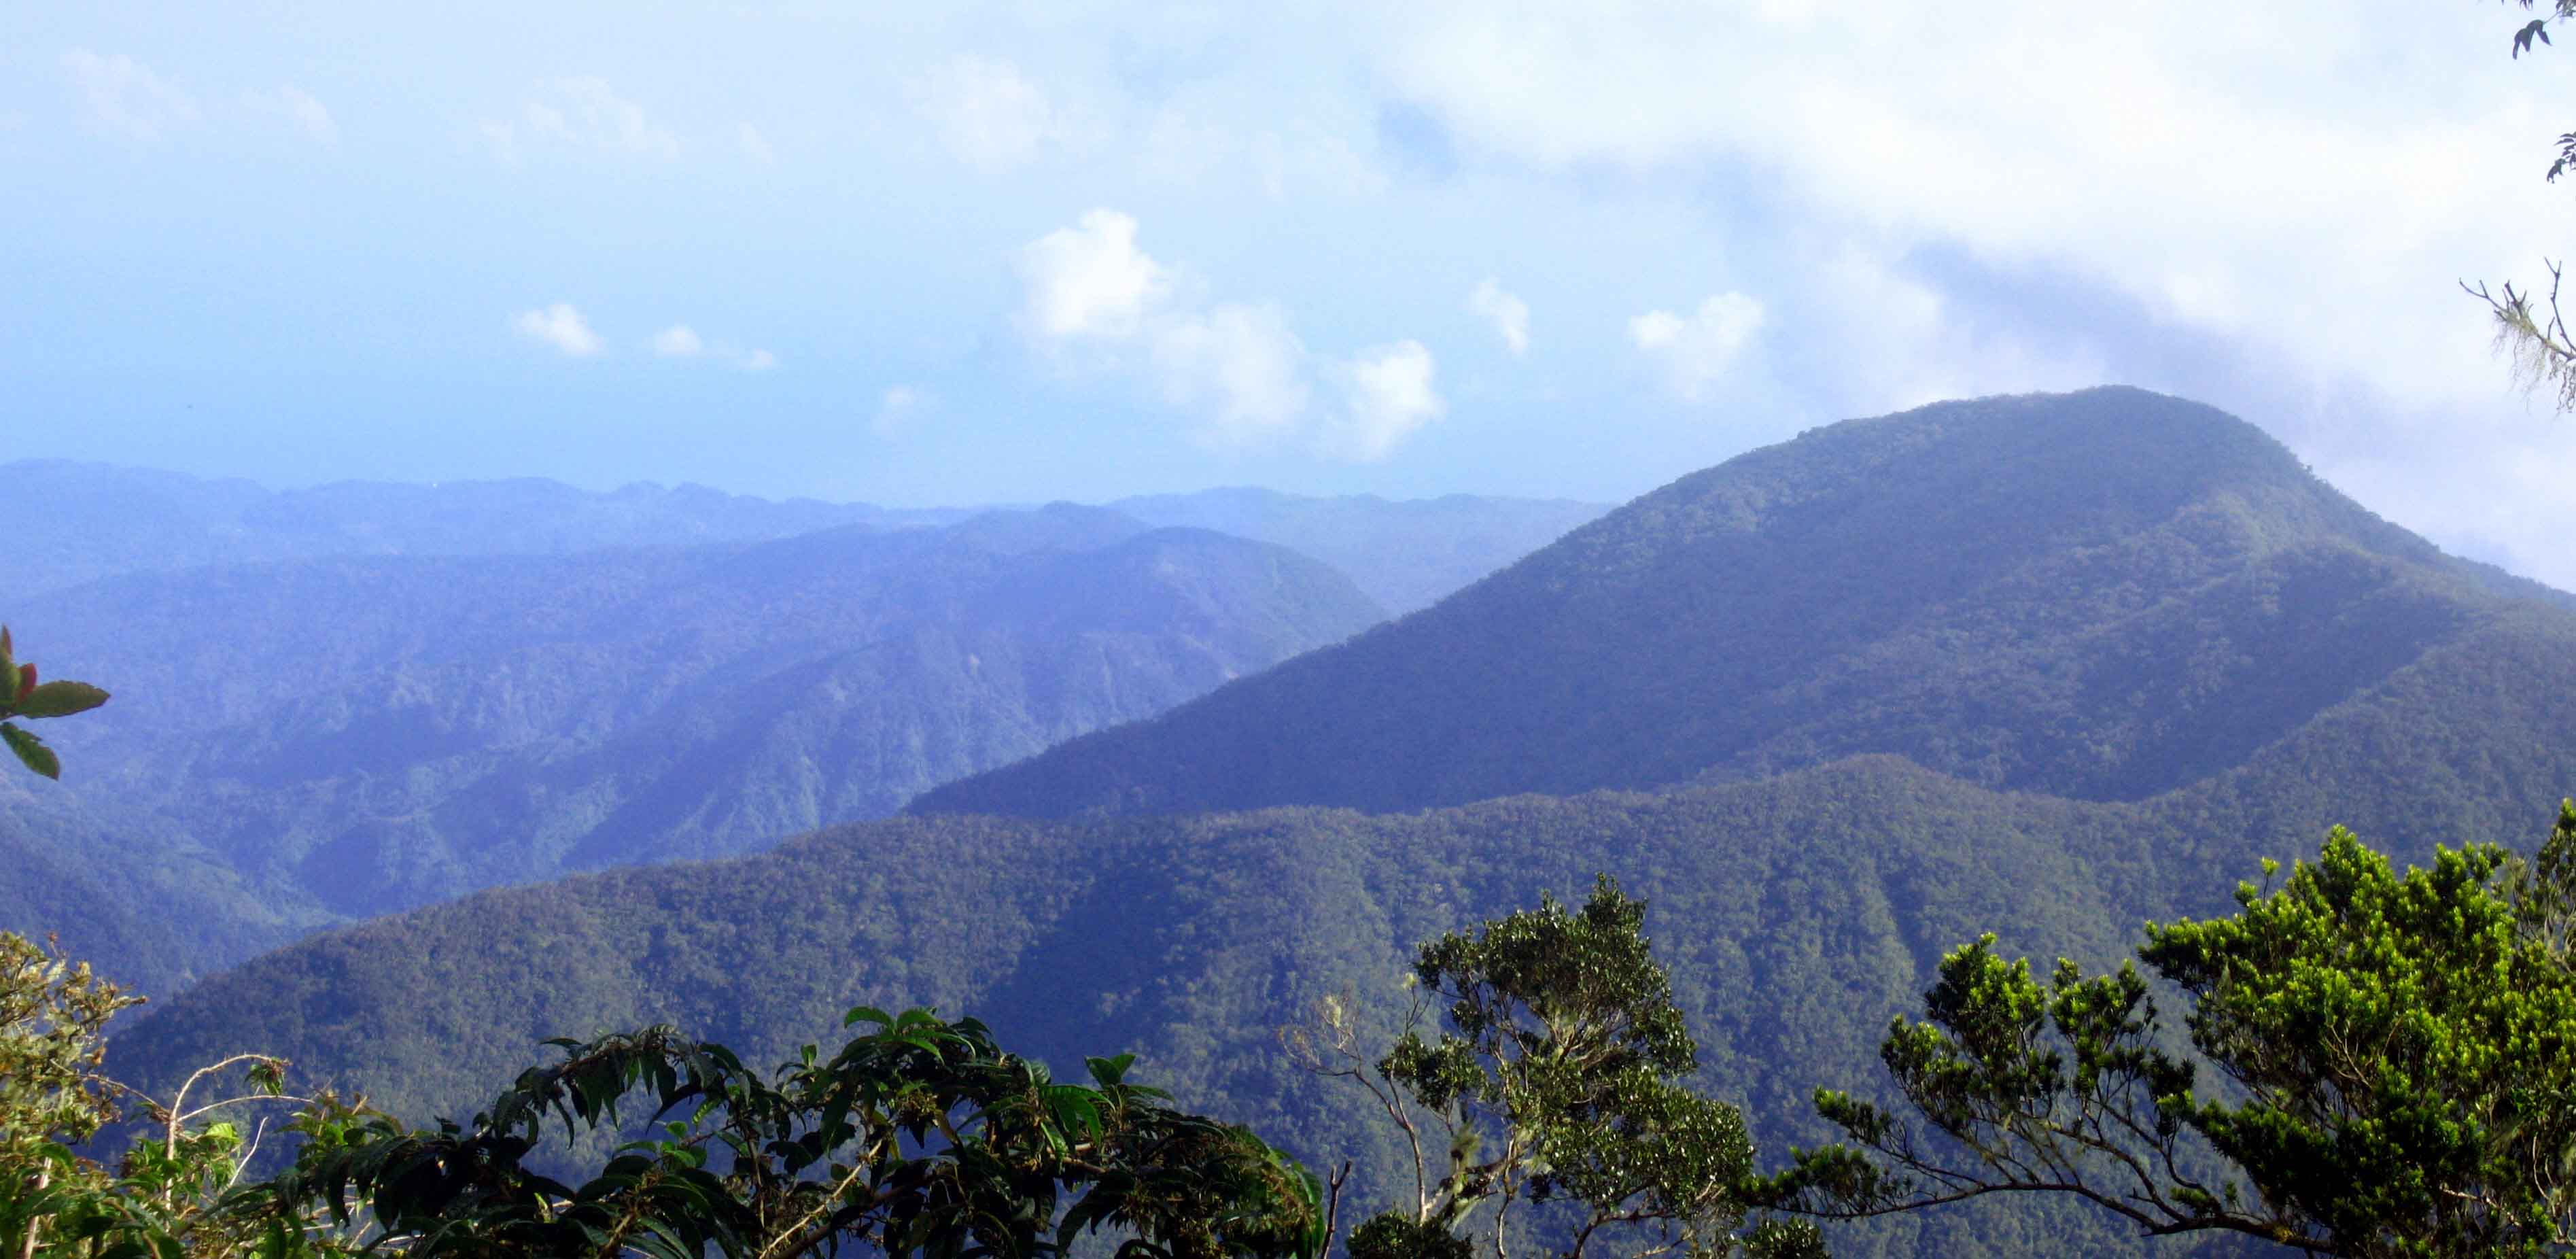 blue mountain peak hiking tour jamaica